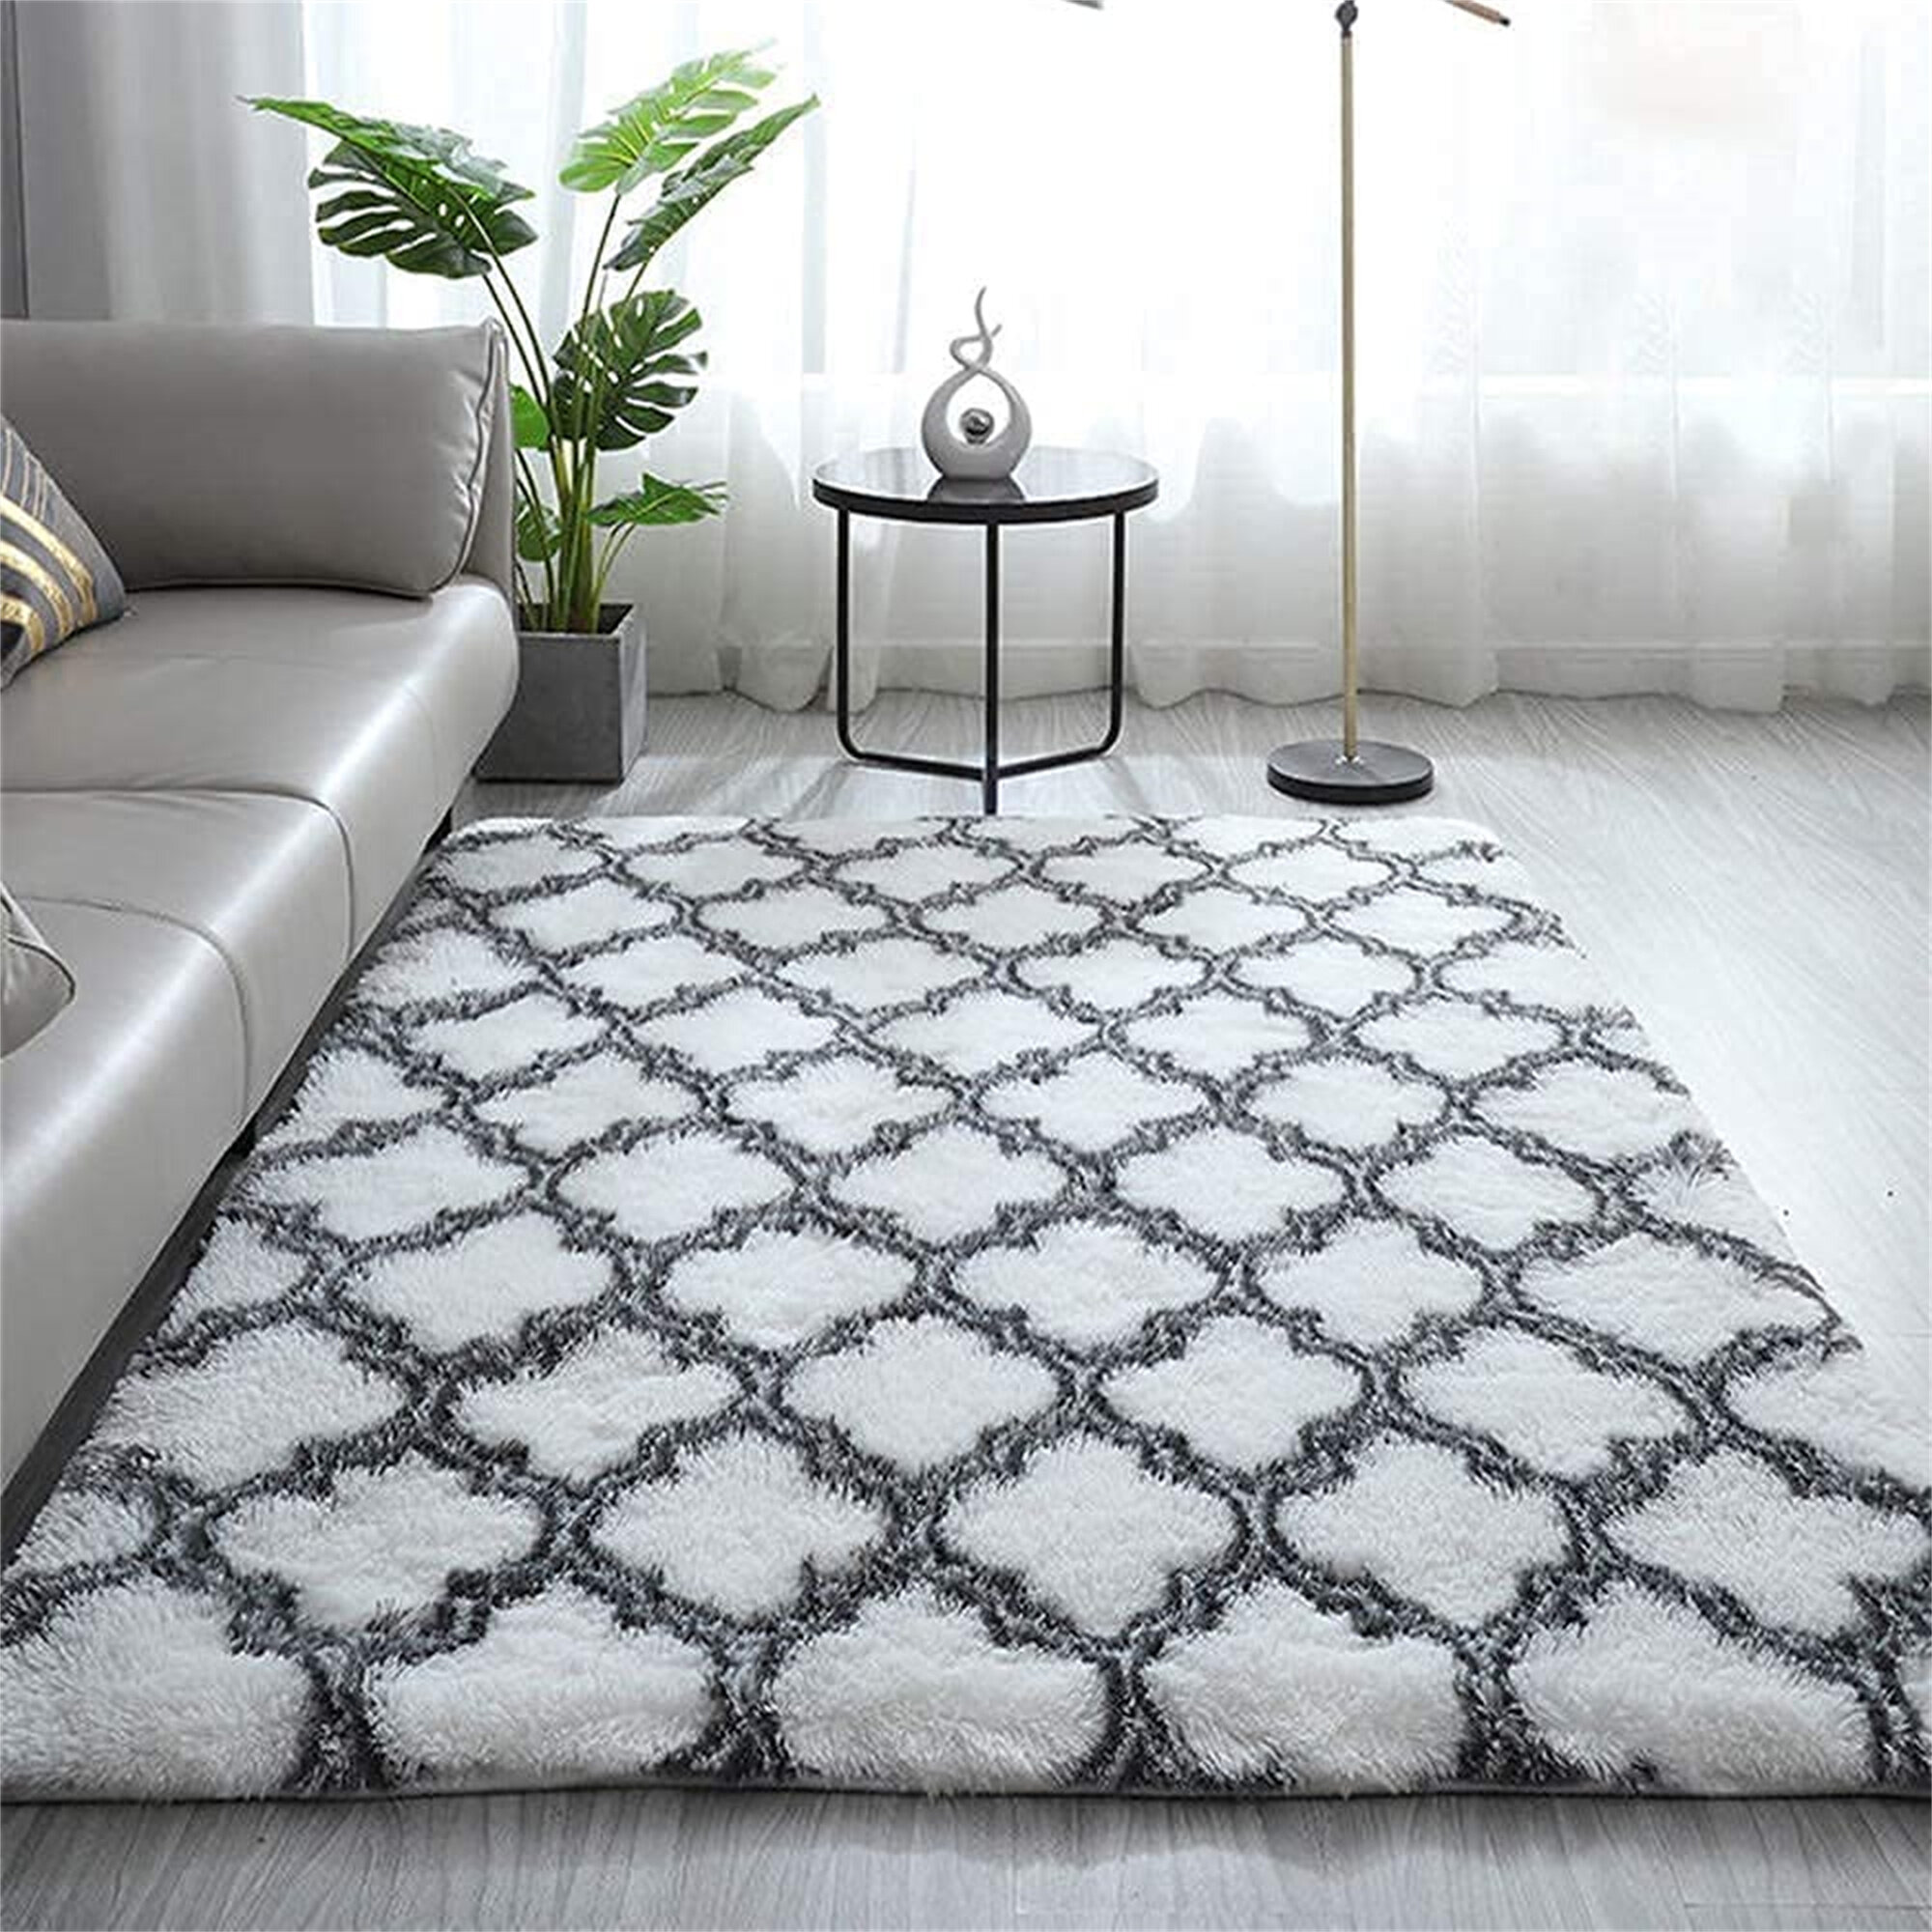 rosalind wheeler area rugs for living room fluffy shaggy super